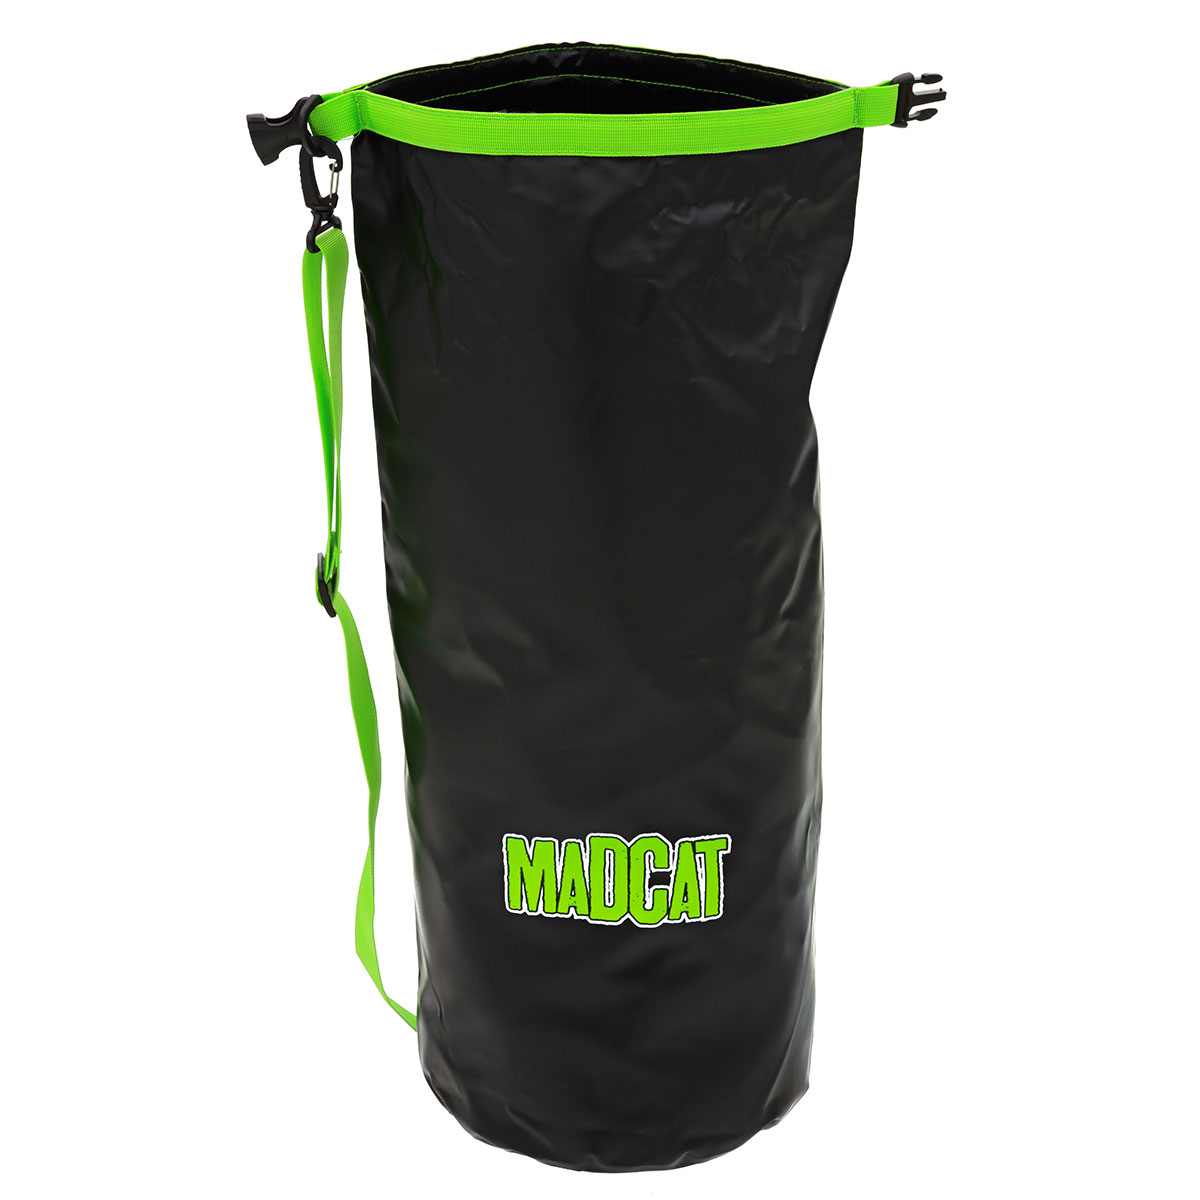 MADCAT Waterproof Bag 25 L